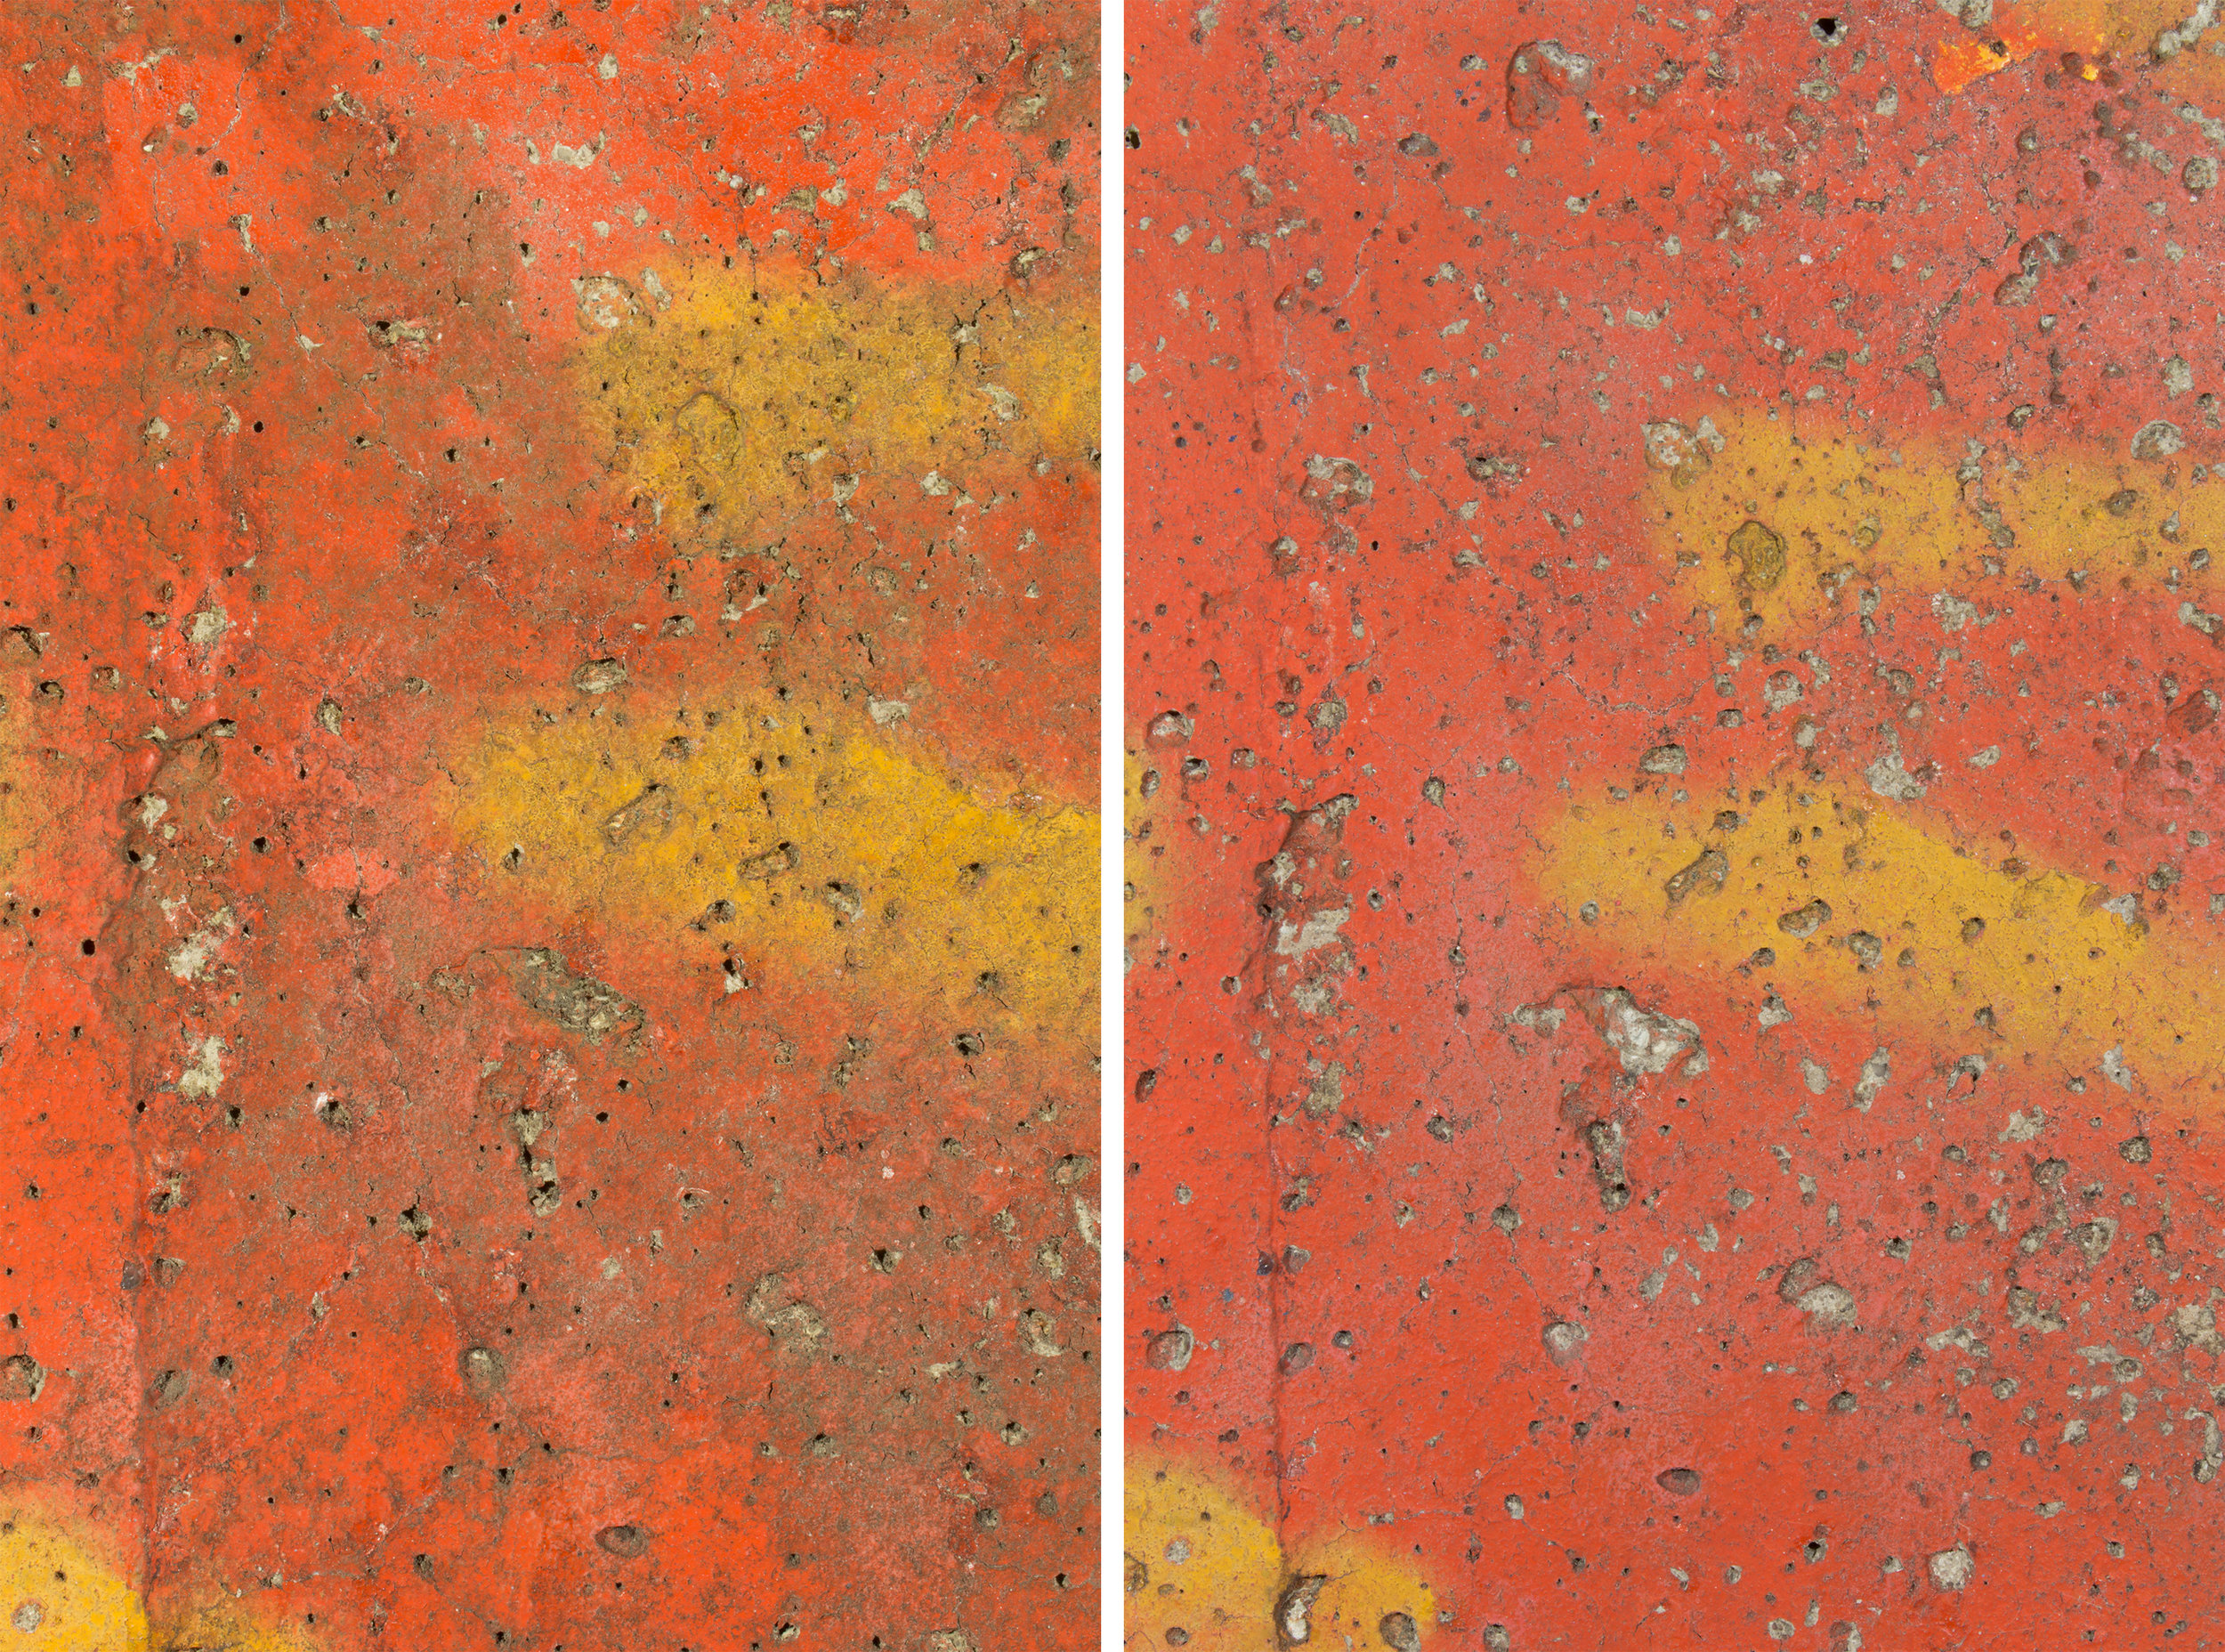  (Detail).&nbsp;Before cleaning (left), After cleaning (right).&nbsp;  Image   
  
 
  
    
  
 Normal 
 0 
 
 
 
 
 false 
 false 
 false 
 
 EN-US 
 JA 
 X-NONE 
 
  
  
  
  
  
  
  
  
  
  
 
 
  
  
  
  
  
  
  
  
  
  
  
  
    
  
 
 
 